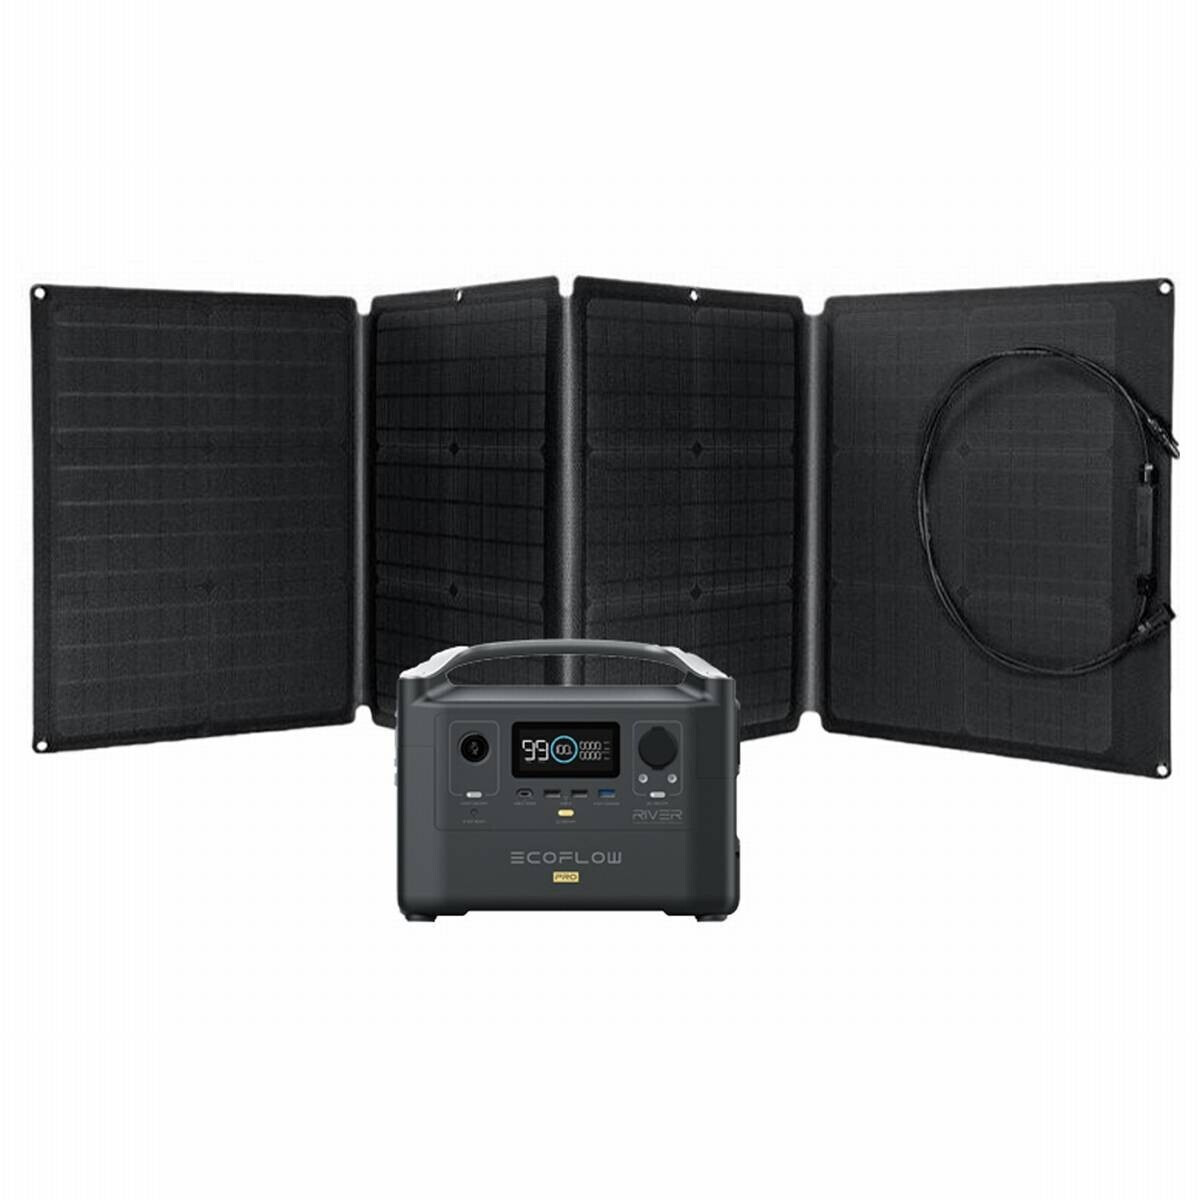 EcoFlow River Pro + 110W Solarpanel im Bundle